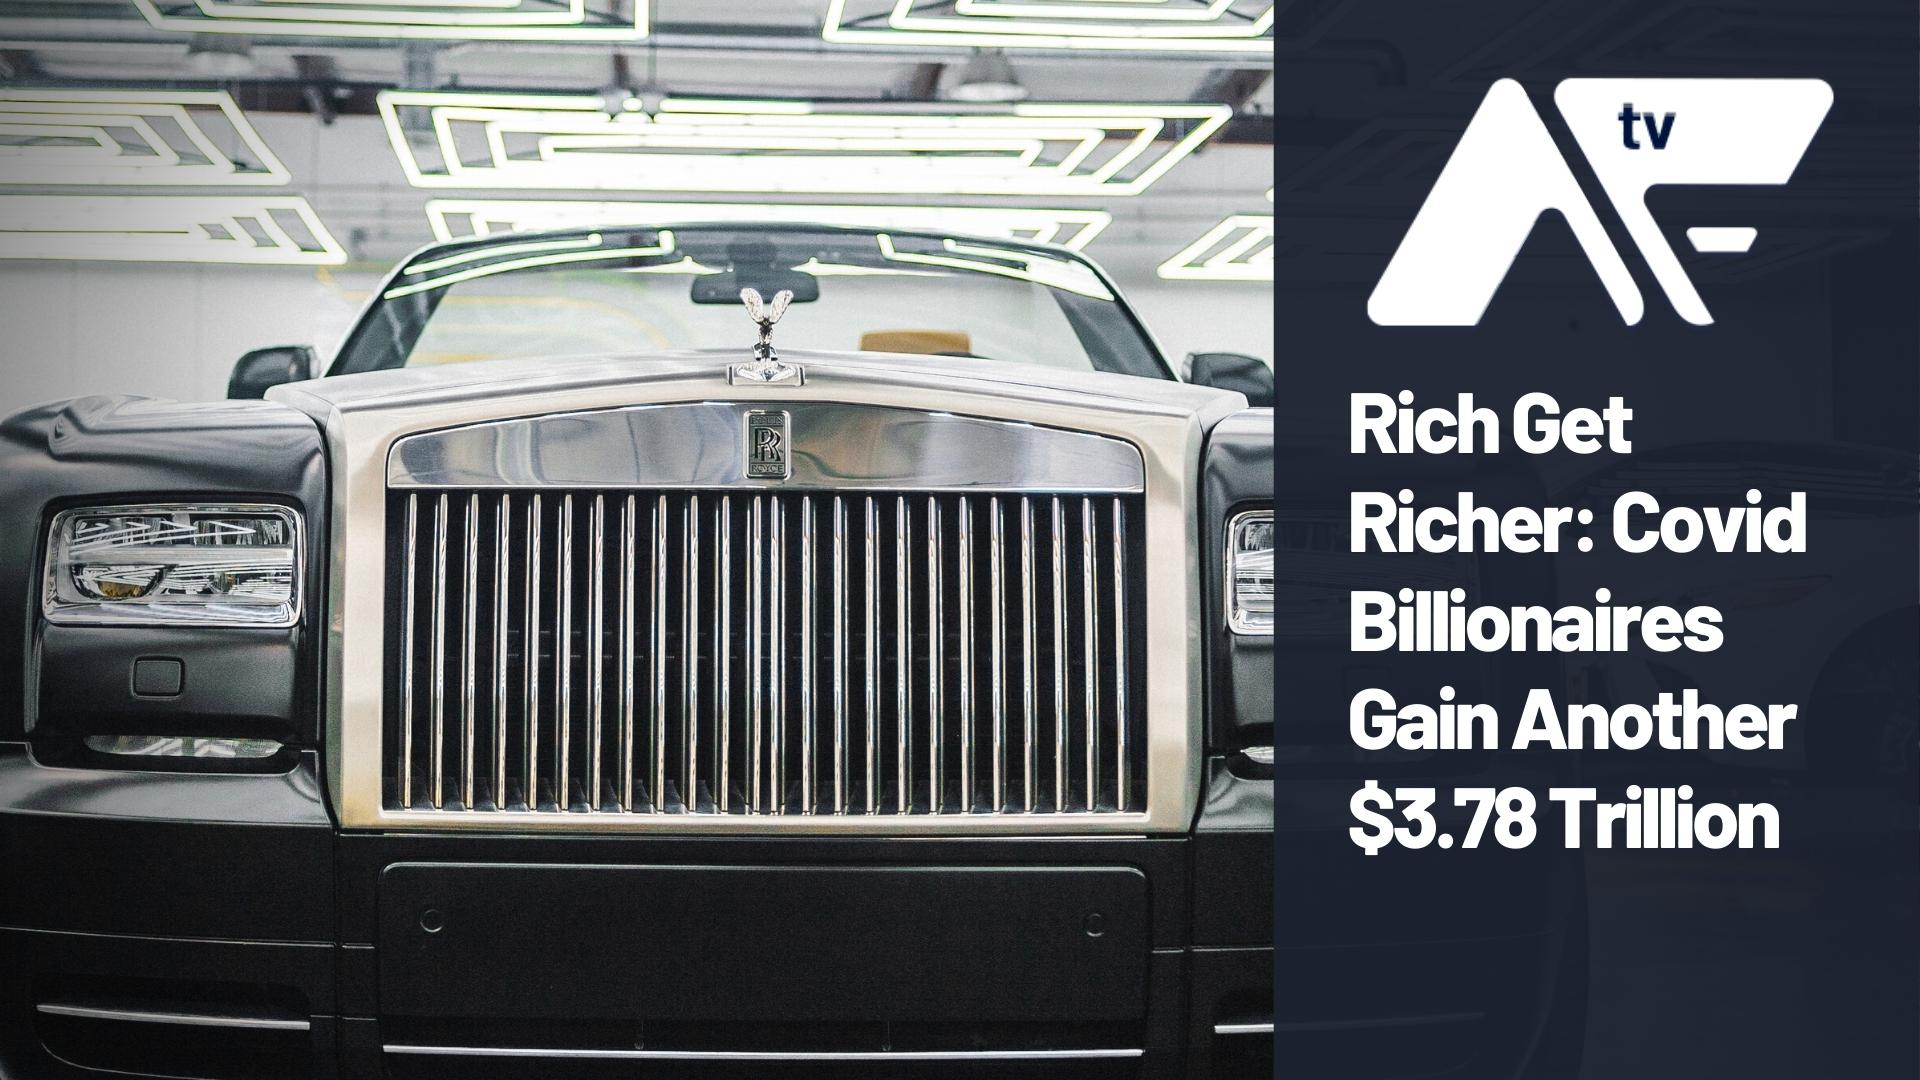 AF TV – Rich Get Richer: Covid Billionaires Gain Another $3.78tn